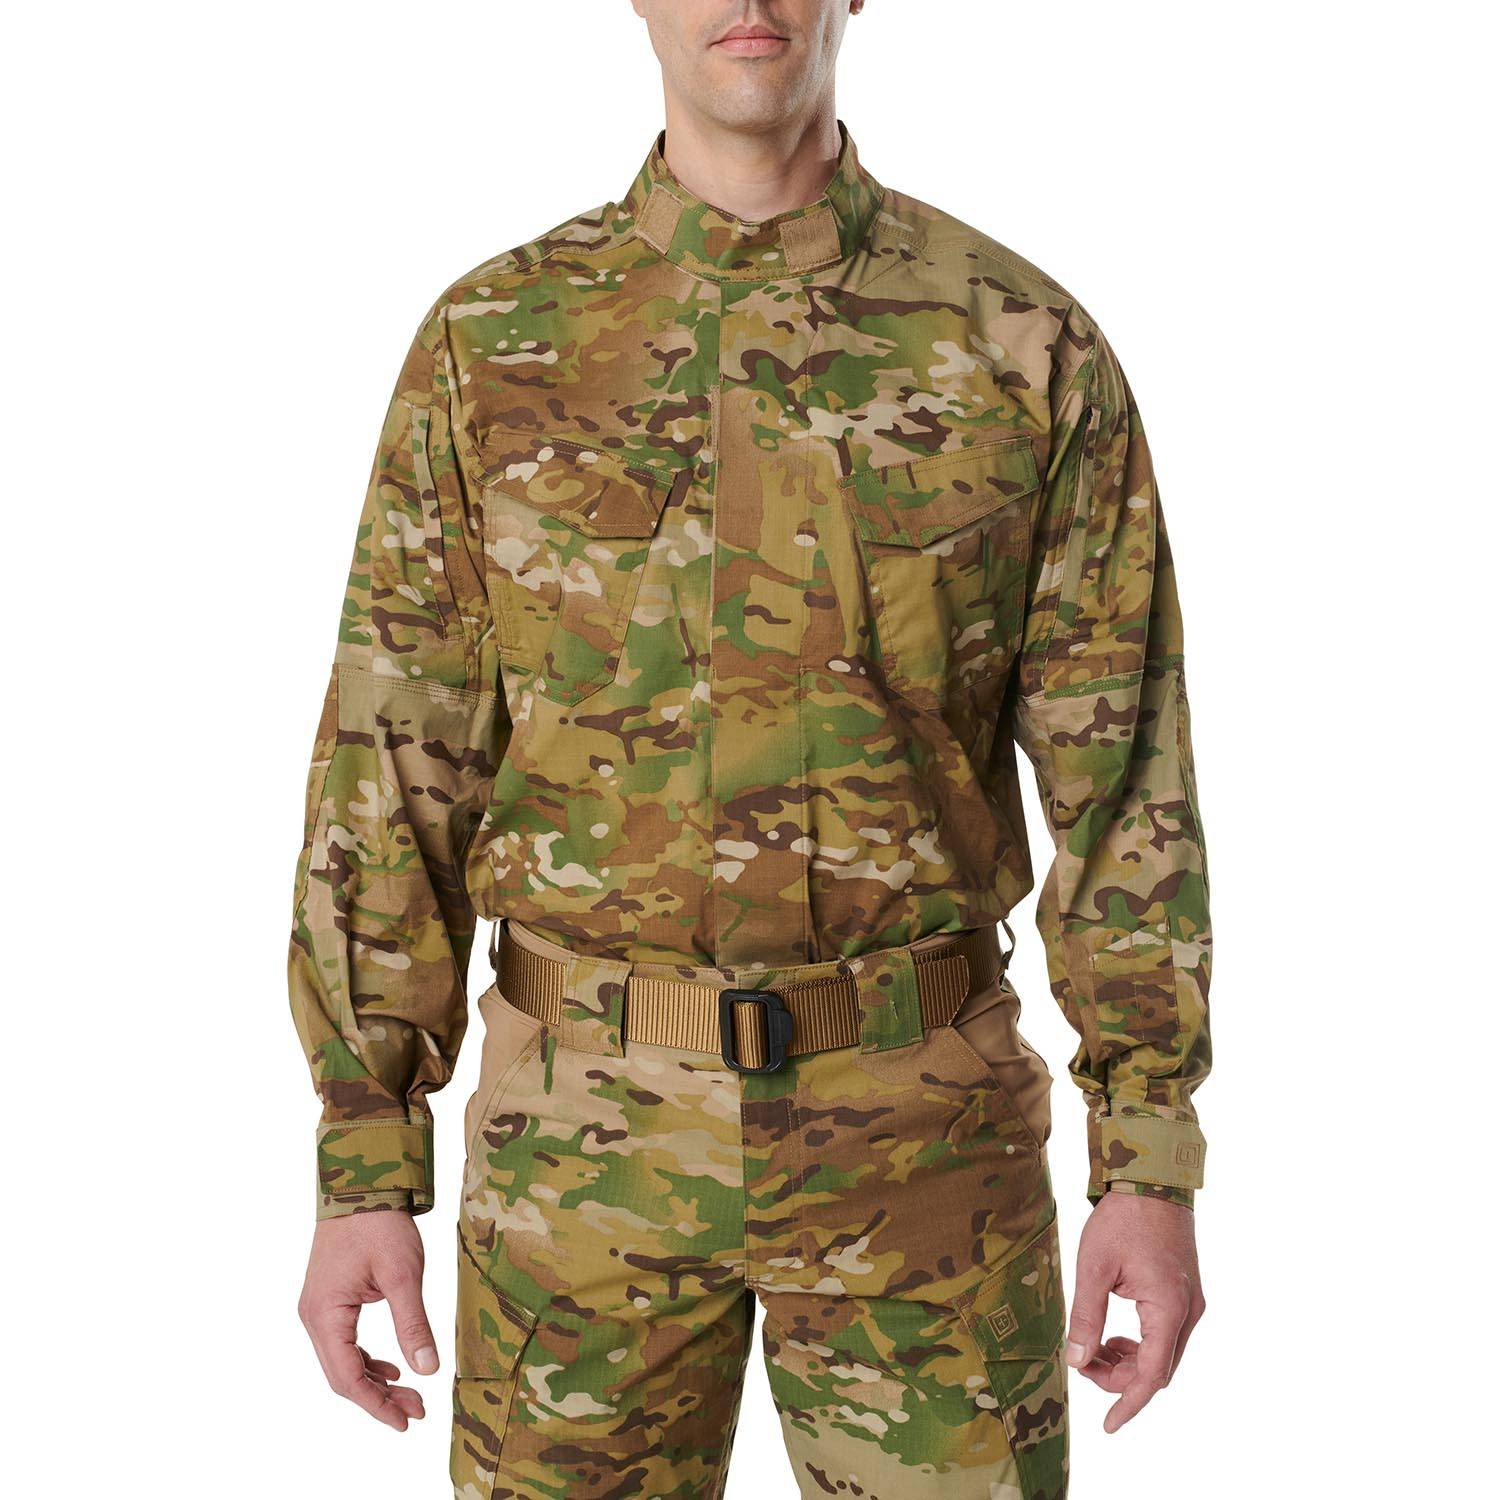 5.11 Tactical Stryke TDU Long Sleeve Shirt